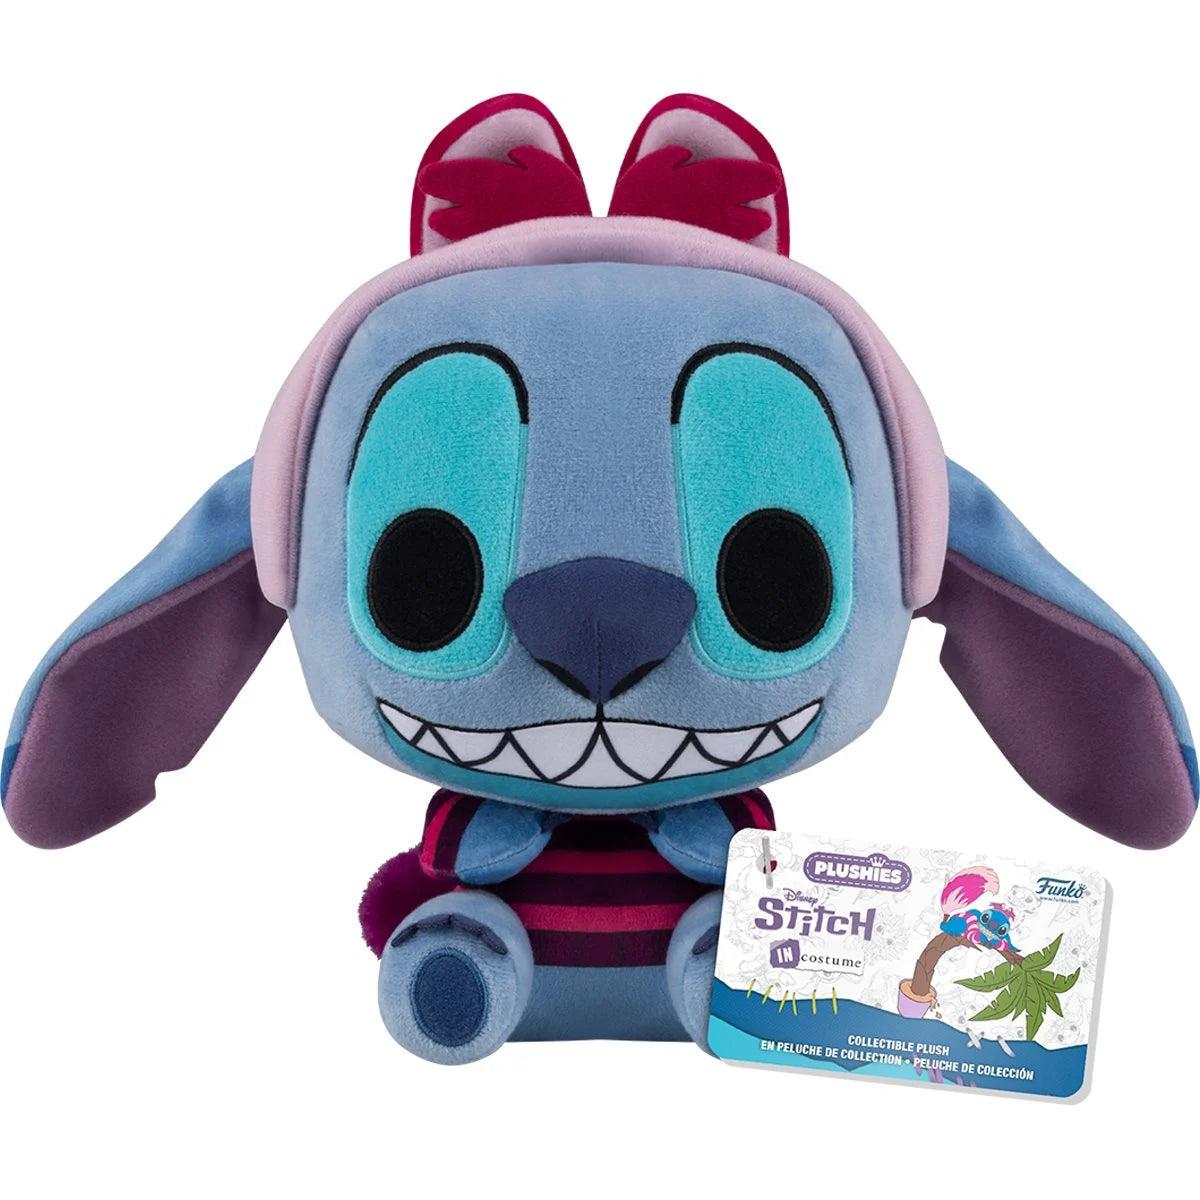 Funko Disney Lilo & Stitch Costume Stitch as Cheshire Cat 7-Inch Plush